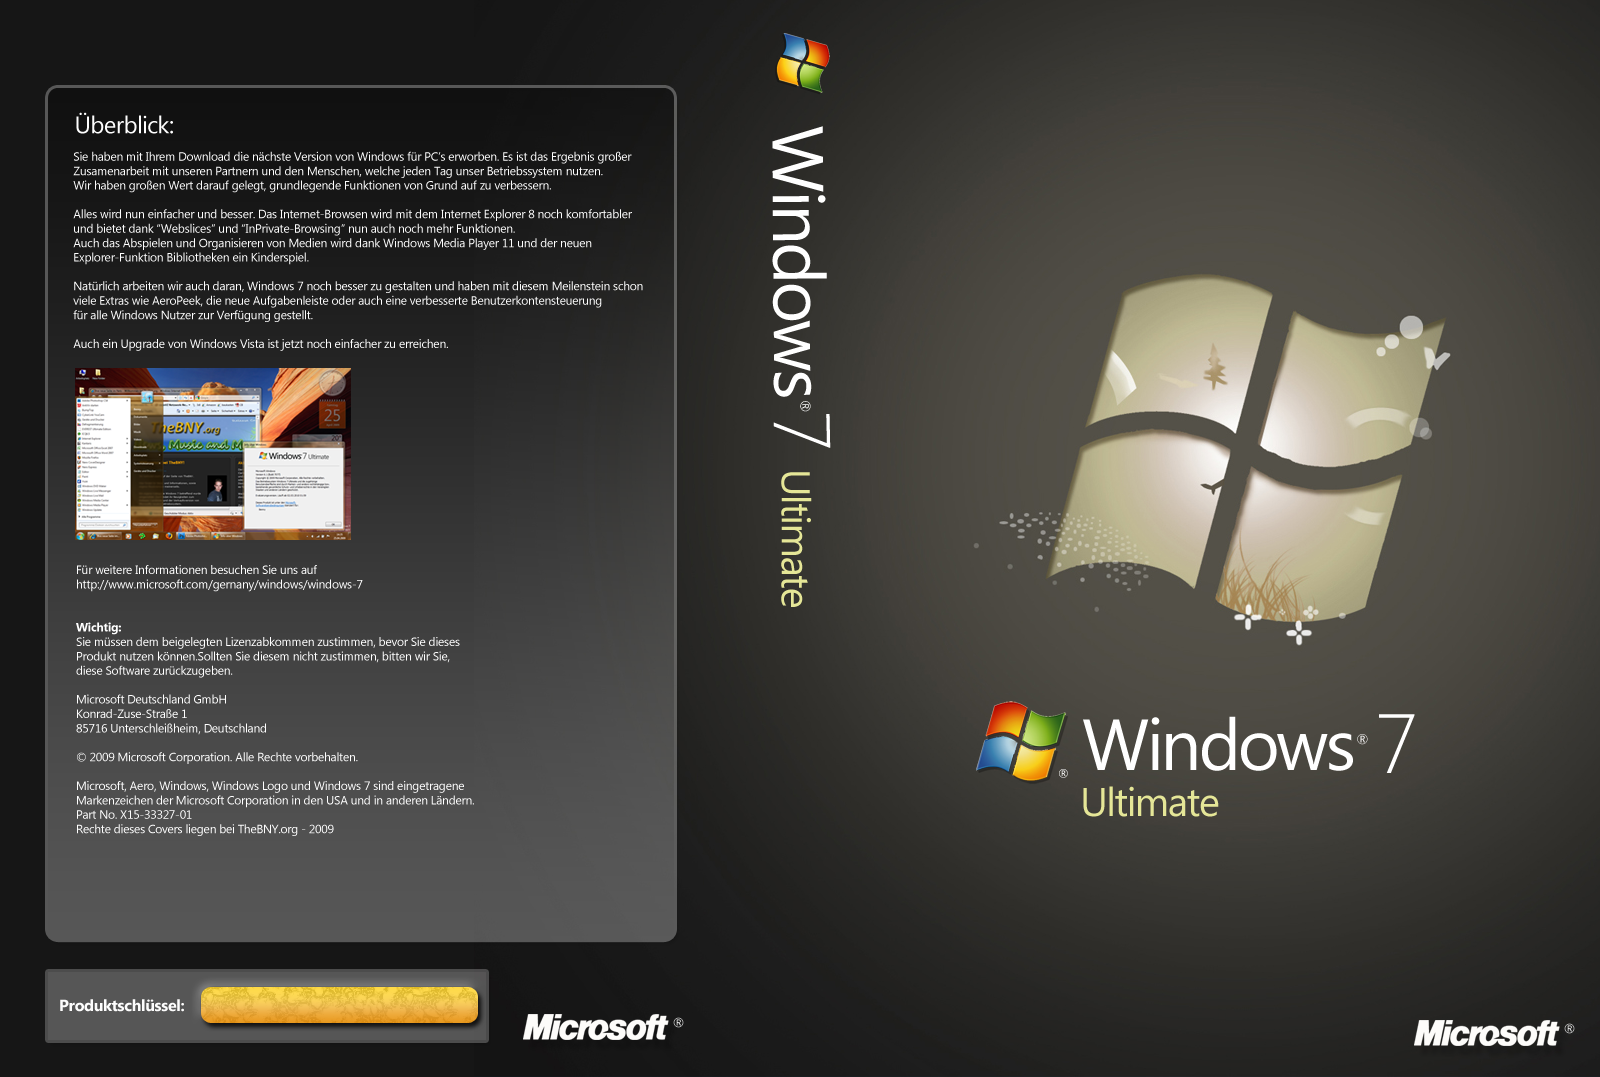 index windows 7 ultimate 32 bit iso